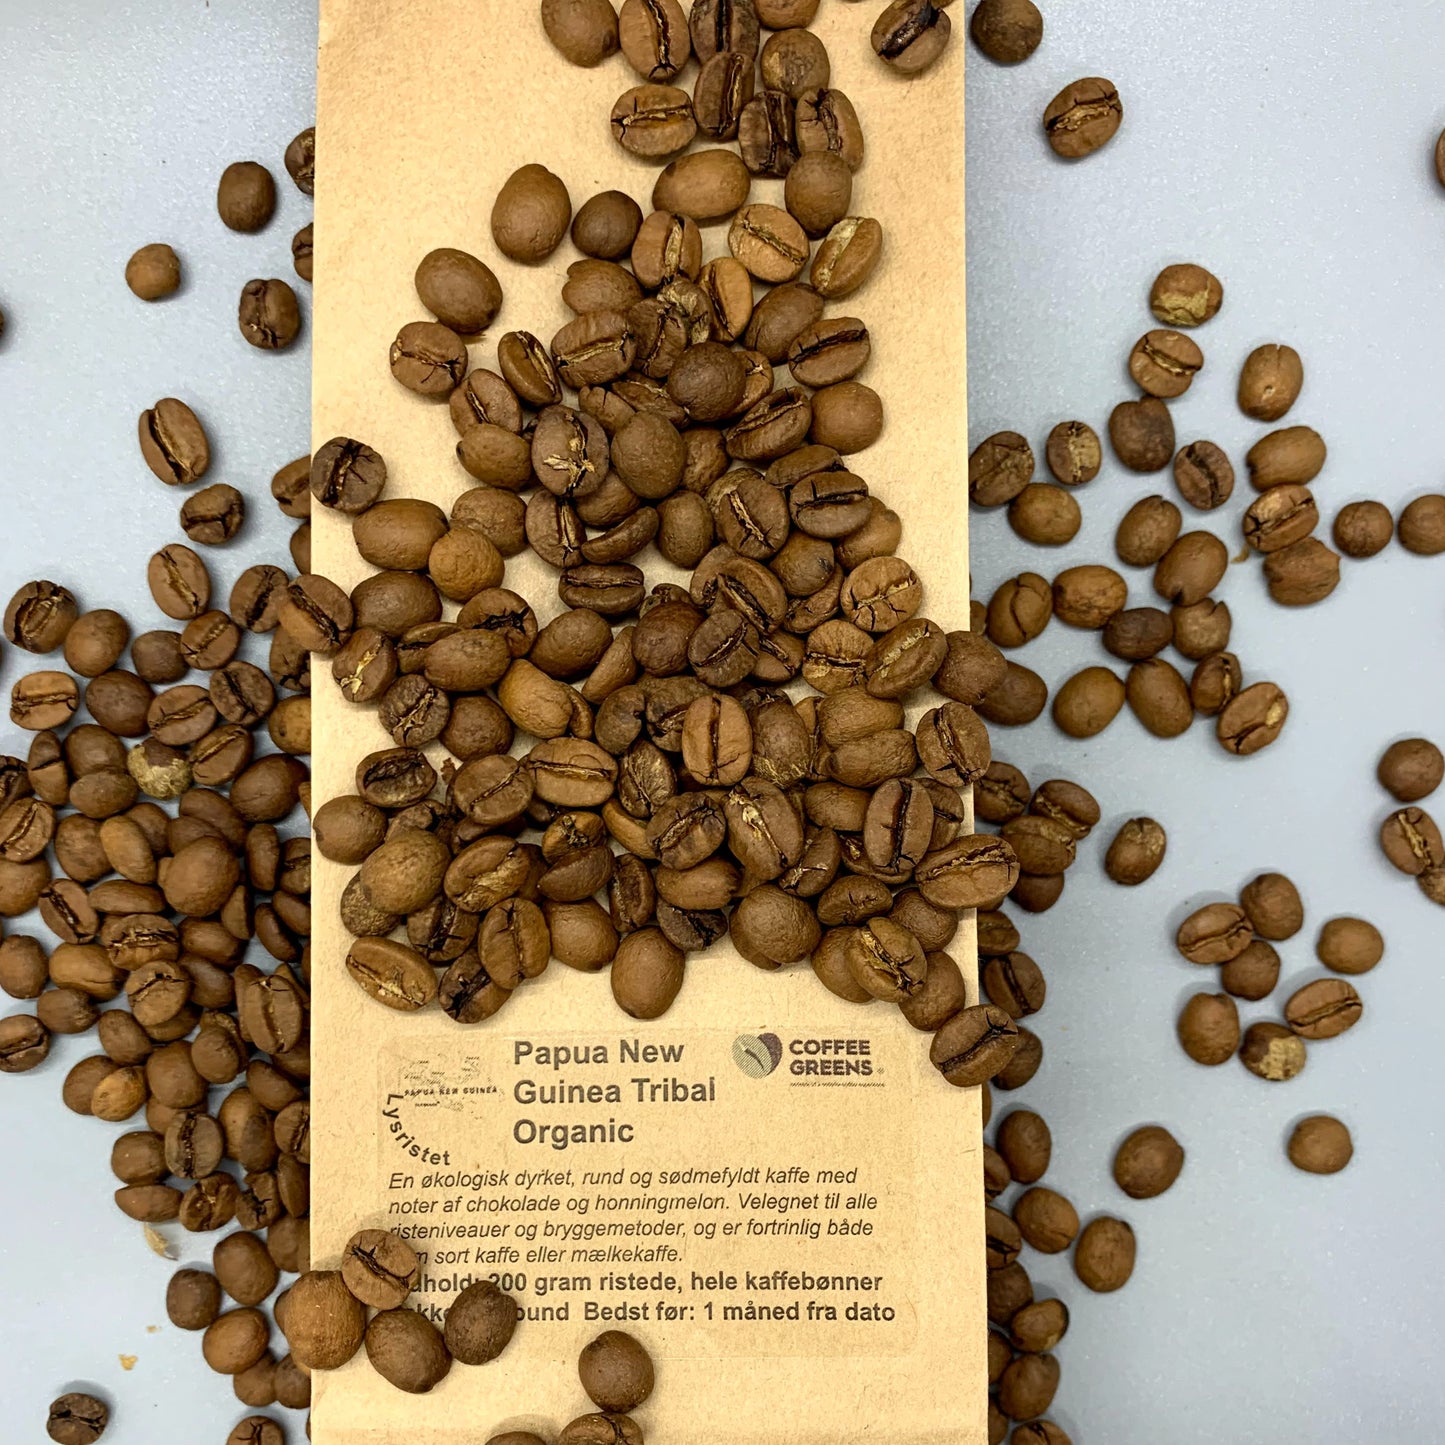 Papua New Guinea Tribal Organic - Roasted Coffee Beans.